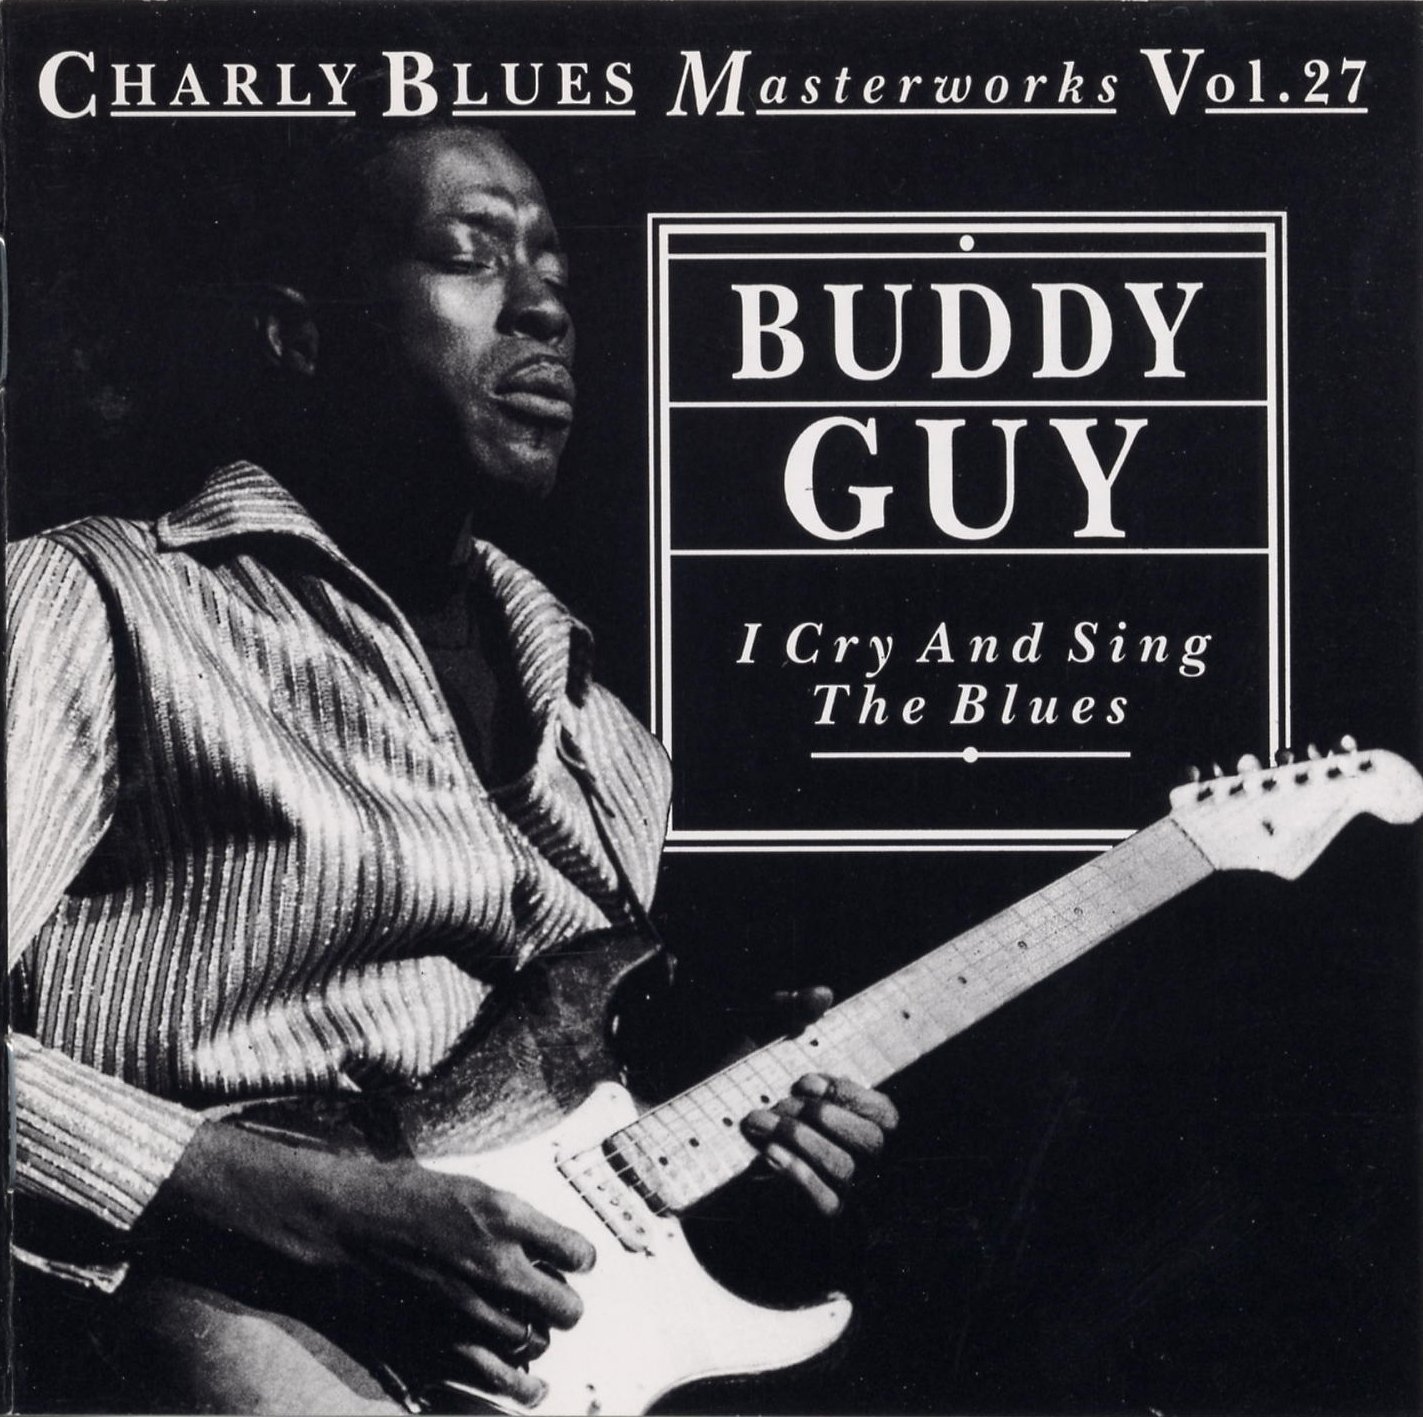 Singing the blues. Buddy guy - 1979 - the Blues giant. Buddy guy "Sweet Tea" (2001) обложка. Buddy guy тщщер.